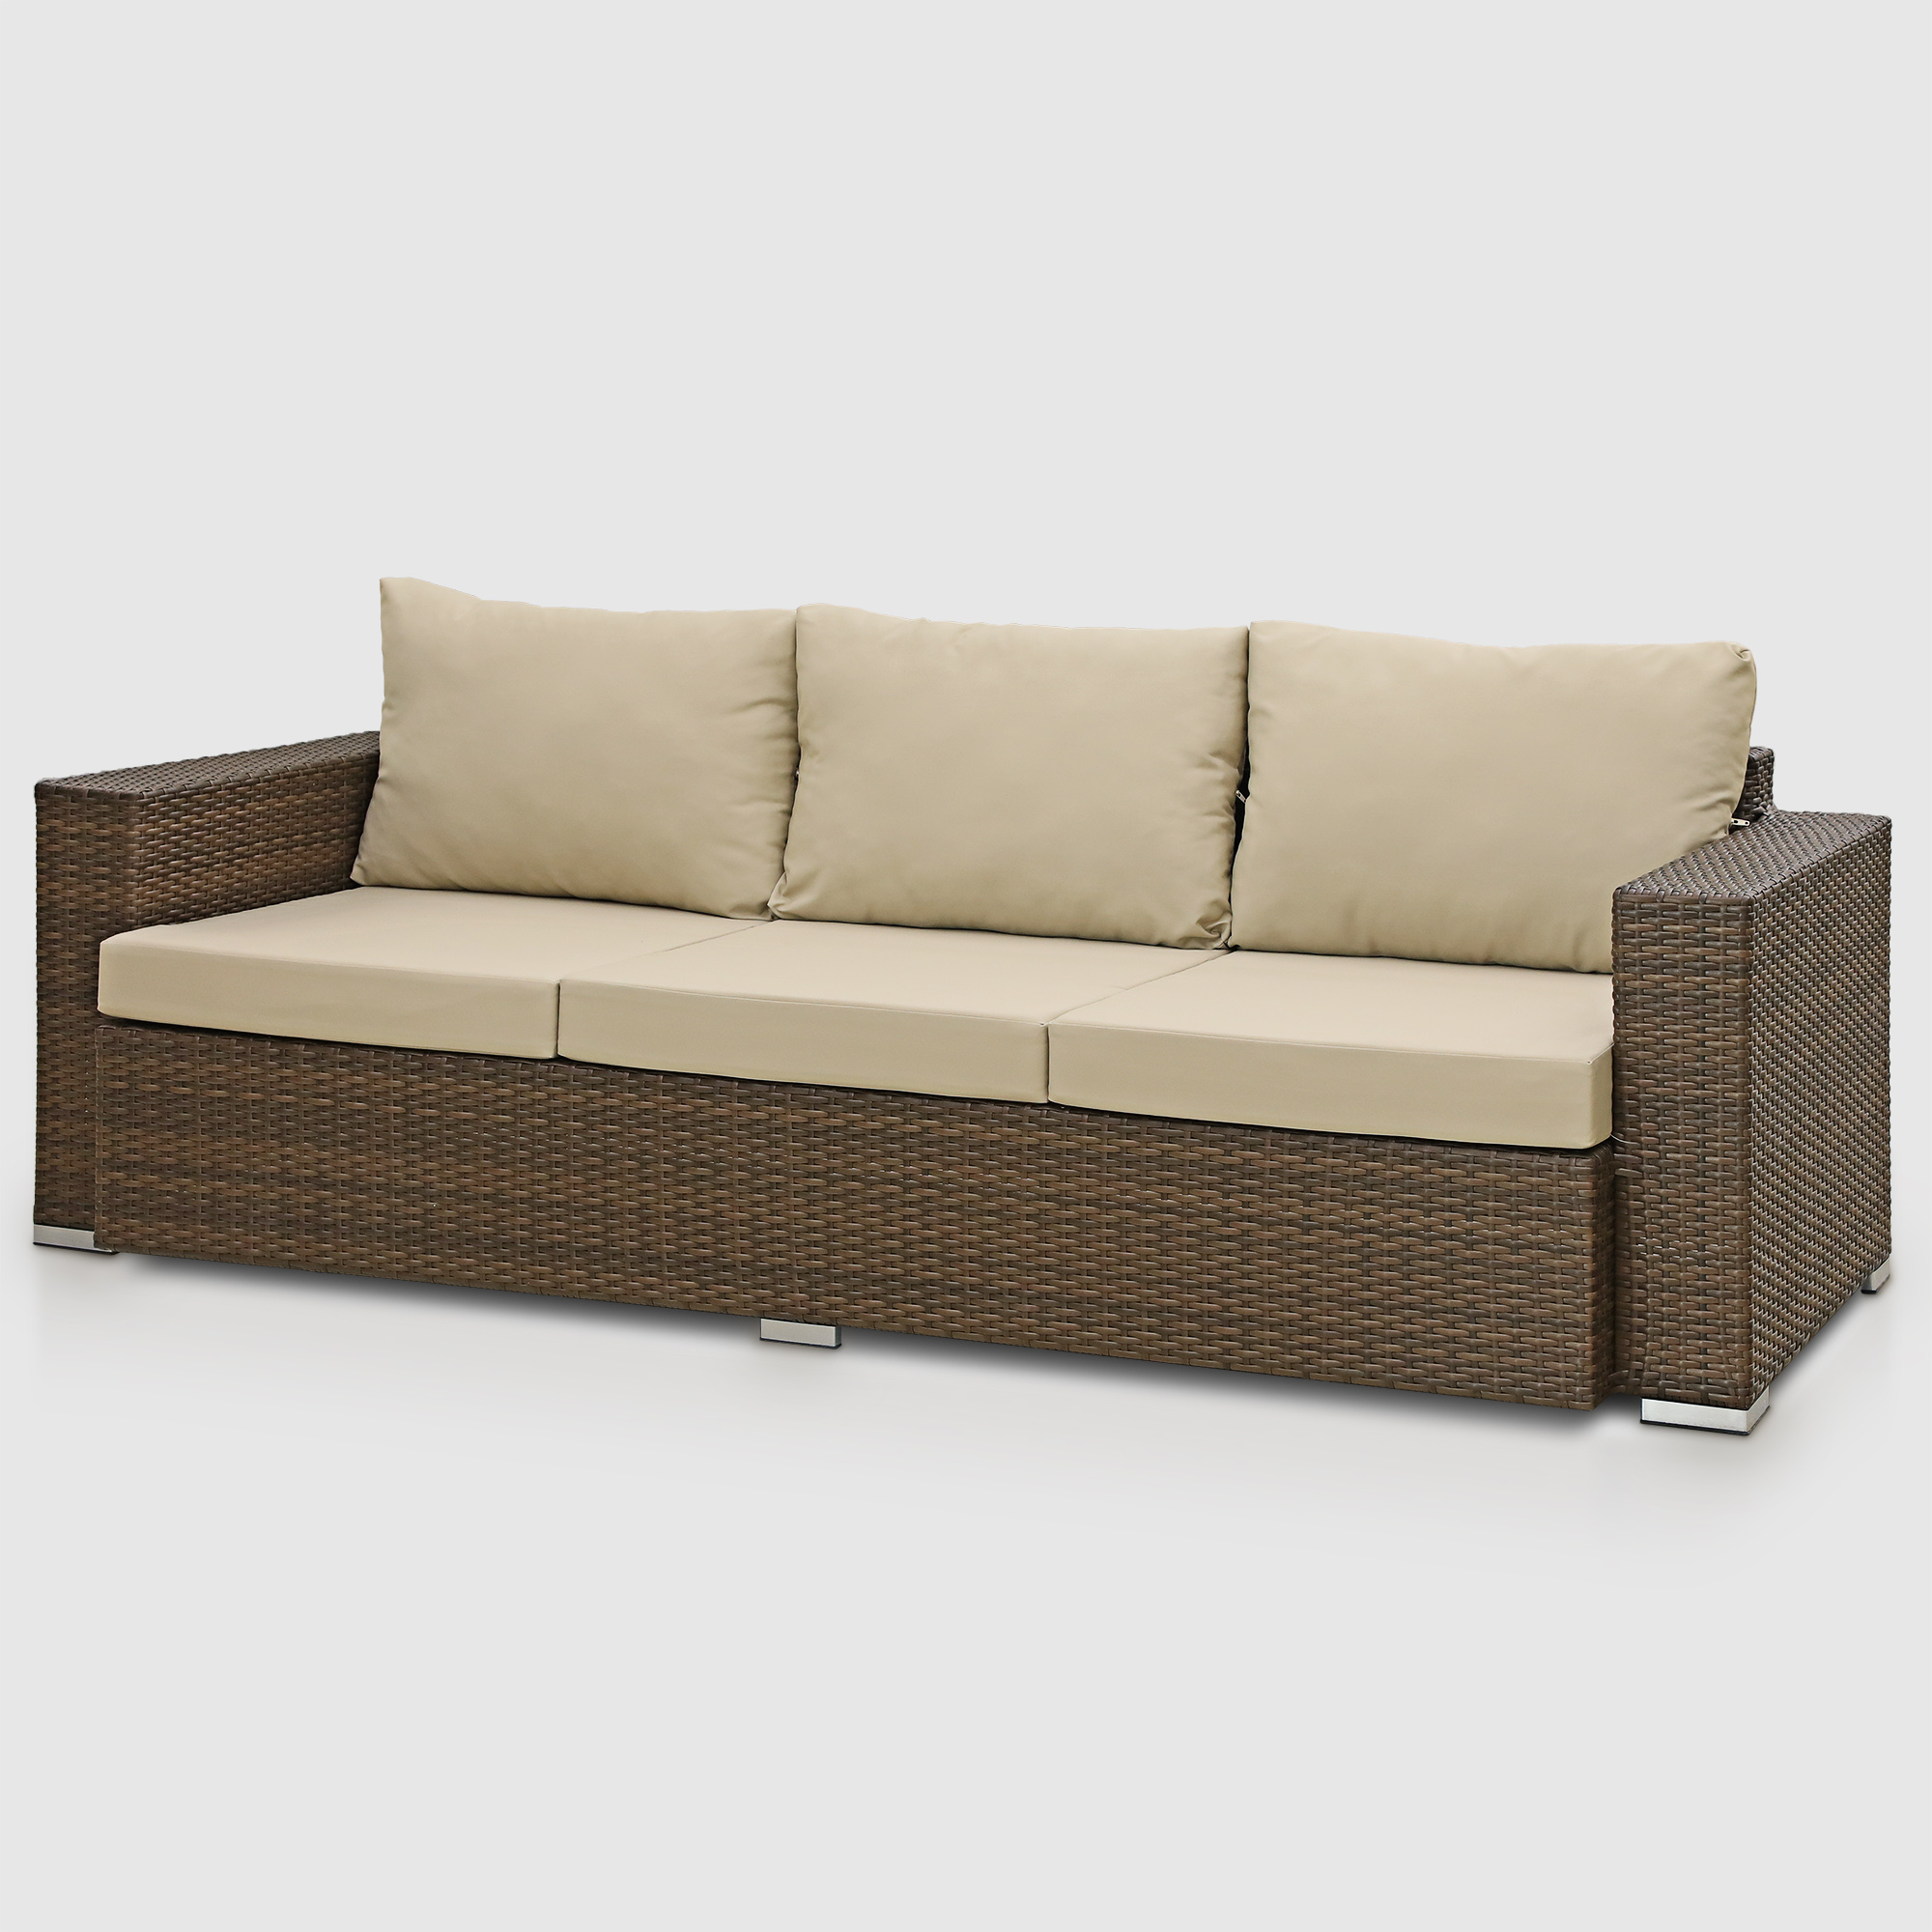 Комплект мебели Ns Rattan Cleo коричневый с бежевым 7 предметов, цвет бежевый, размер 224х88х70 - фото 15